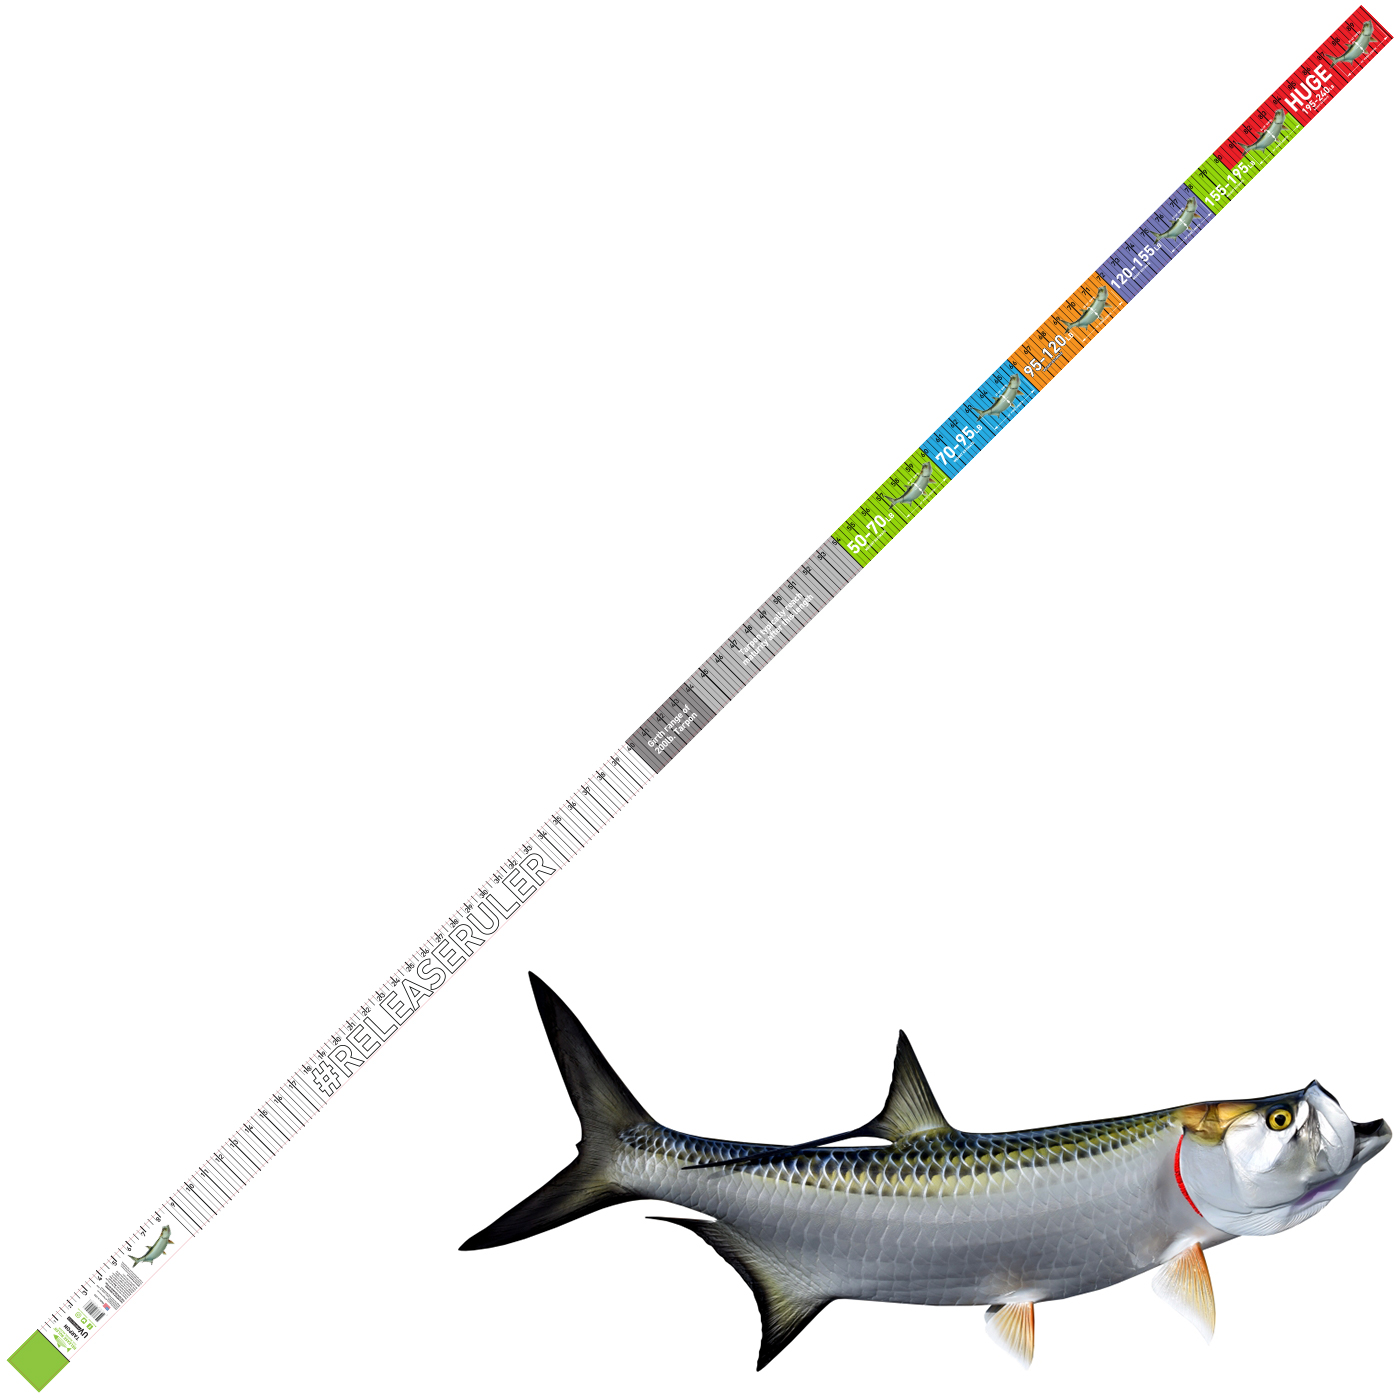 RELEASE RULER Measuring Tape Swordfish Release Ruler Inch/Lb